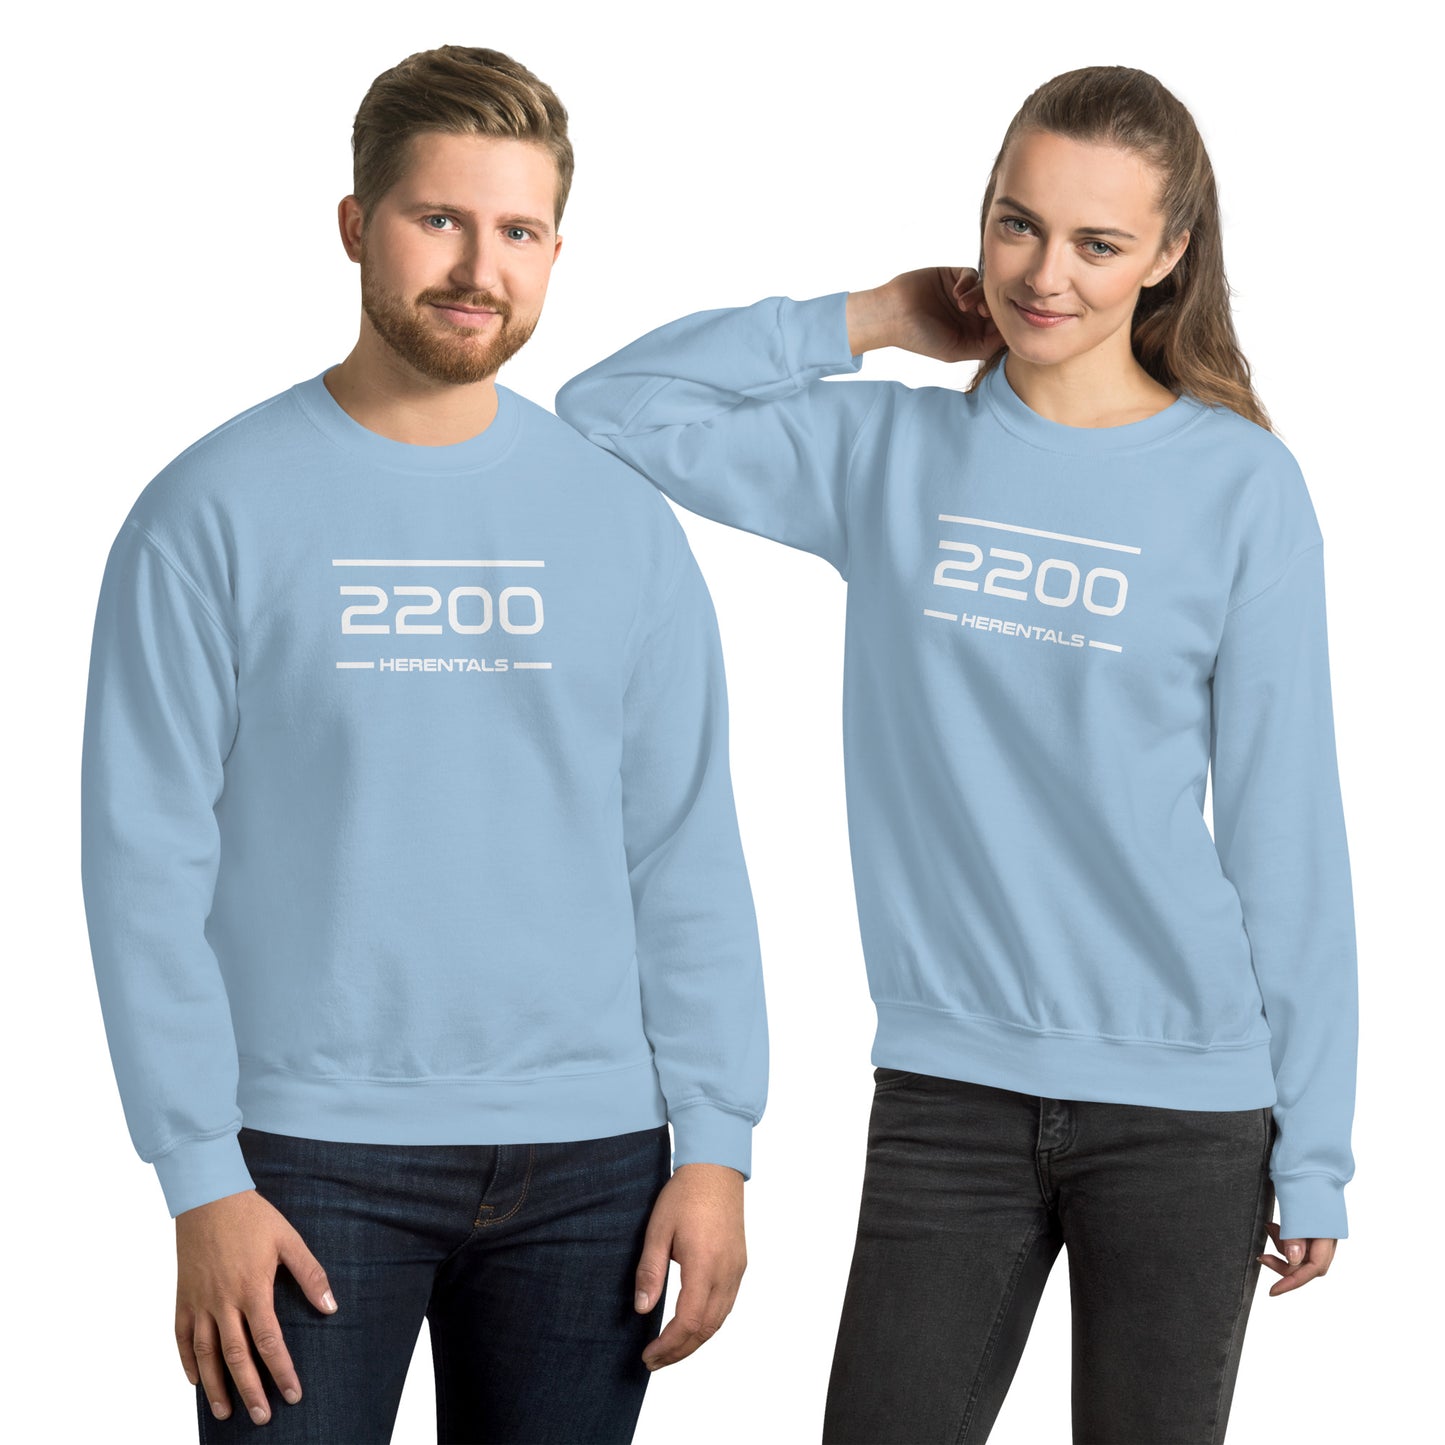 Sweater - 2200 - Herentals (M/V)